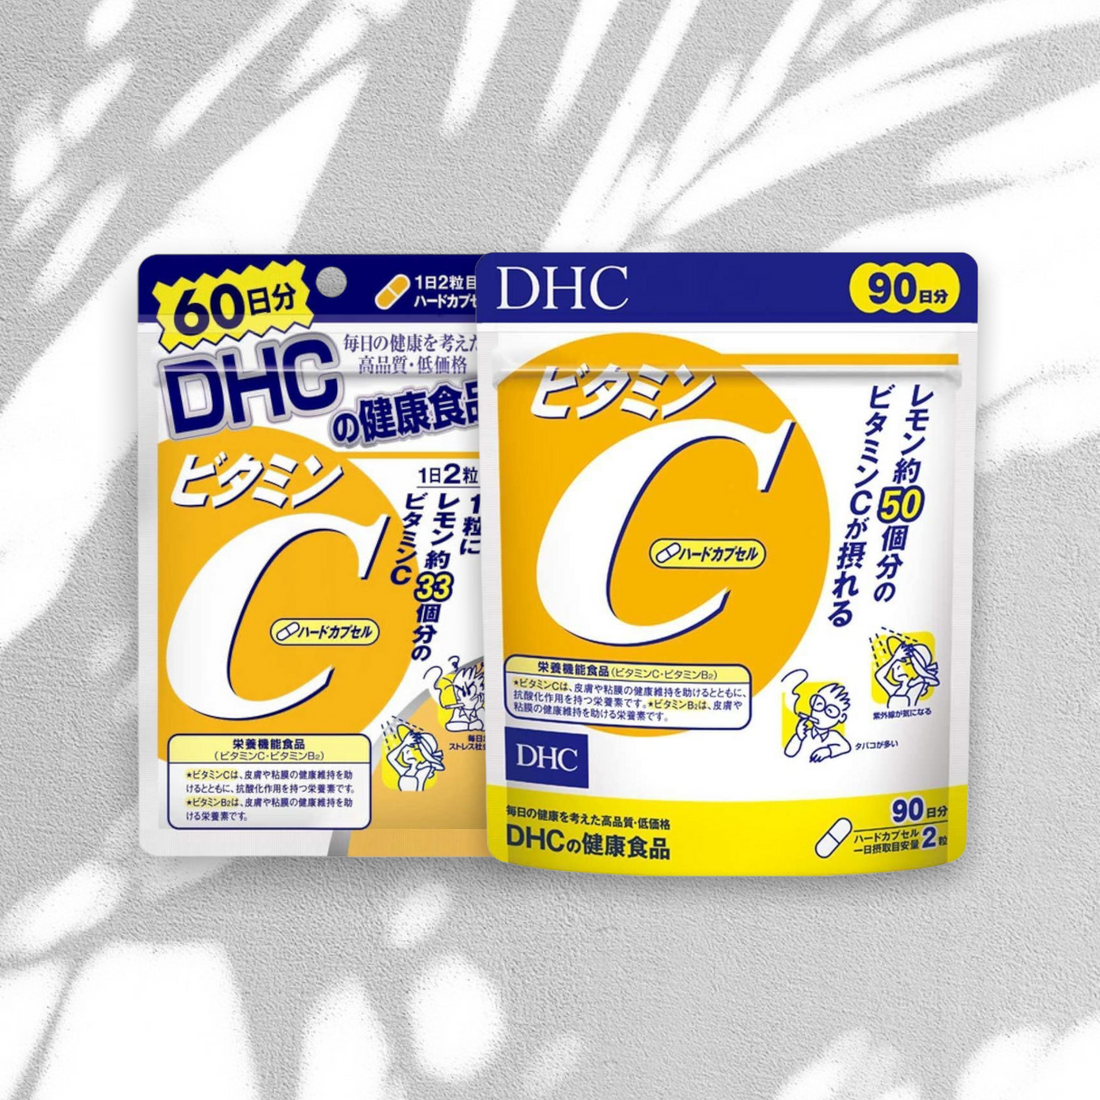 DHC Vitamin C Supplement - 2 size